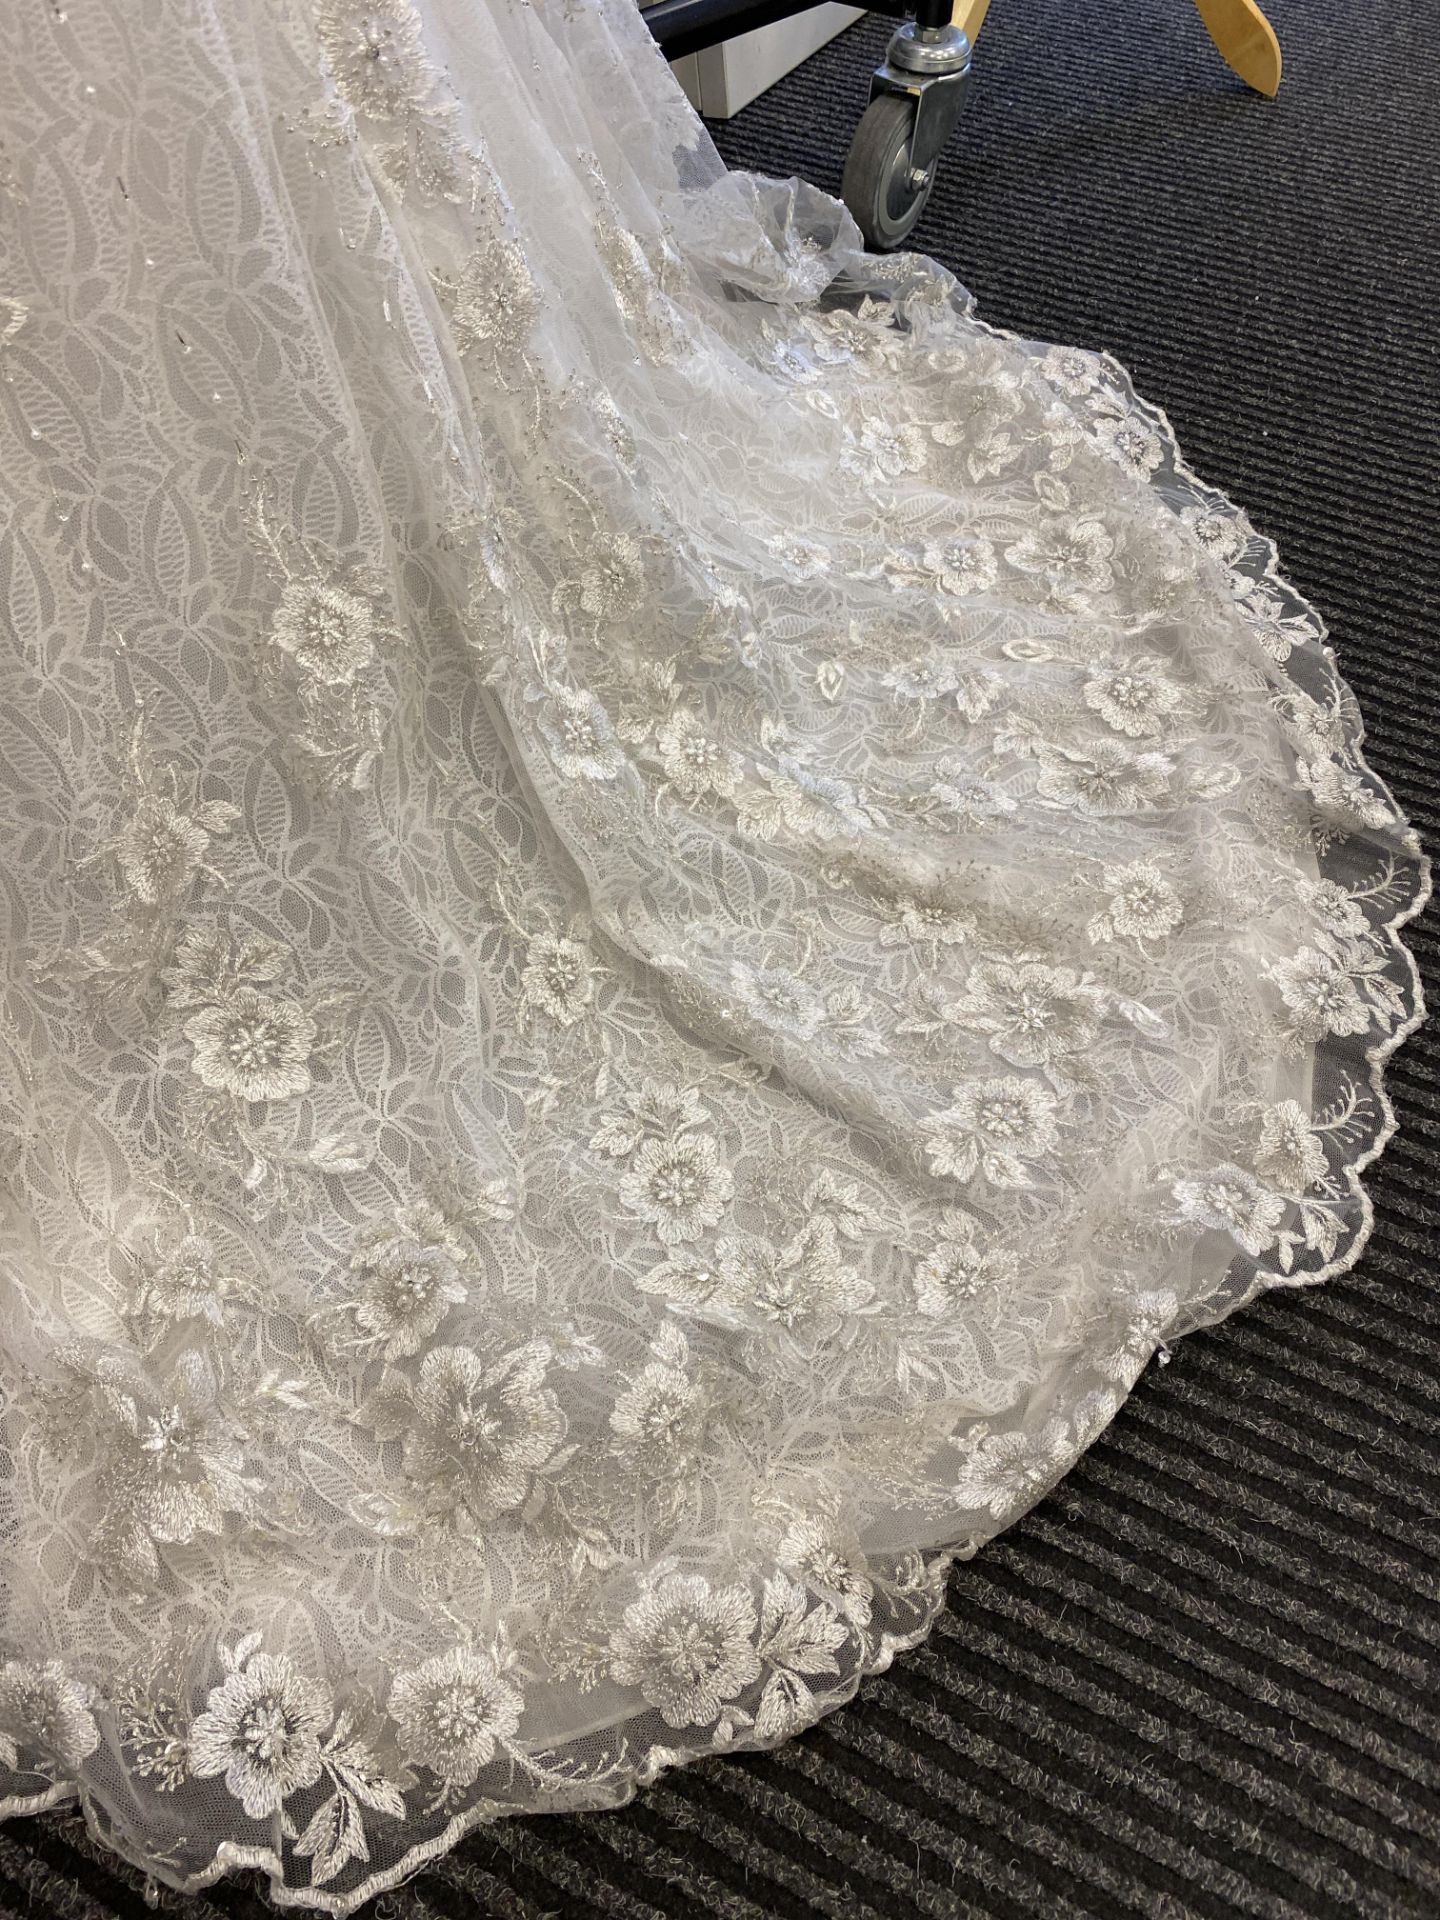 1 x LUSAN MANDONGUS 'Anastasia' Stunning Lace And Embroidered Designer Wedding Dress RRP £1,850 UK12 - Image 10 of 10